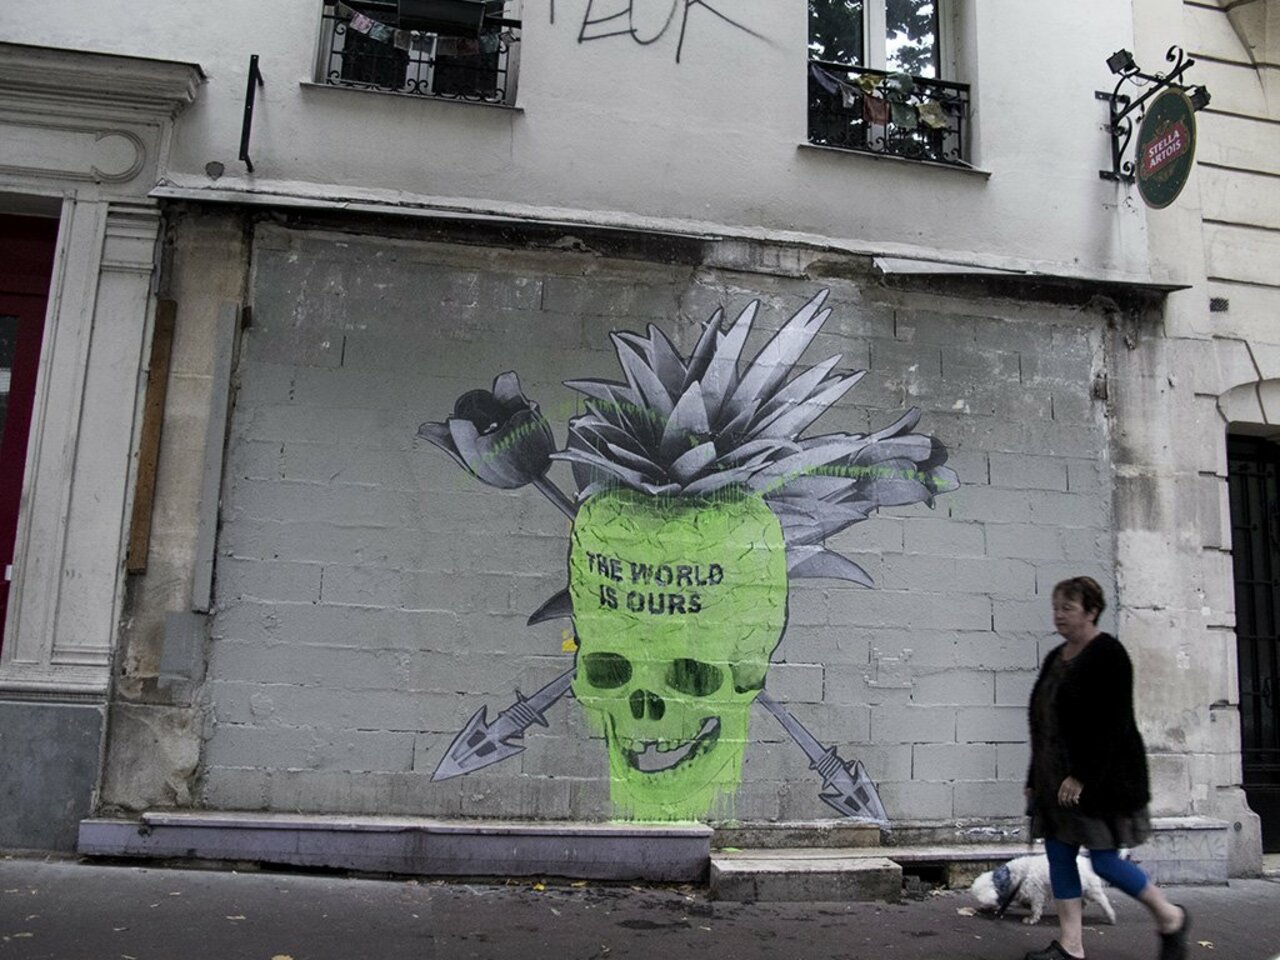 "The World Is Ours" & "Decay Of A Nation" by Ludo in Paris, France #streetart https://streetartnews.net/2016/08/the-world-is-ours-decay-of-a-nation-by-ludo-in-paris-france.html https://t.co/XWSXxjTK5G